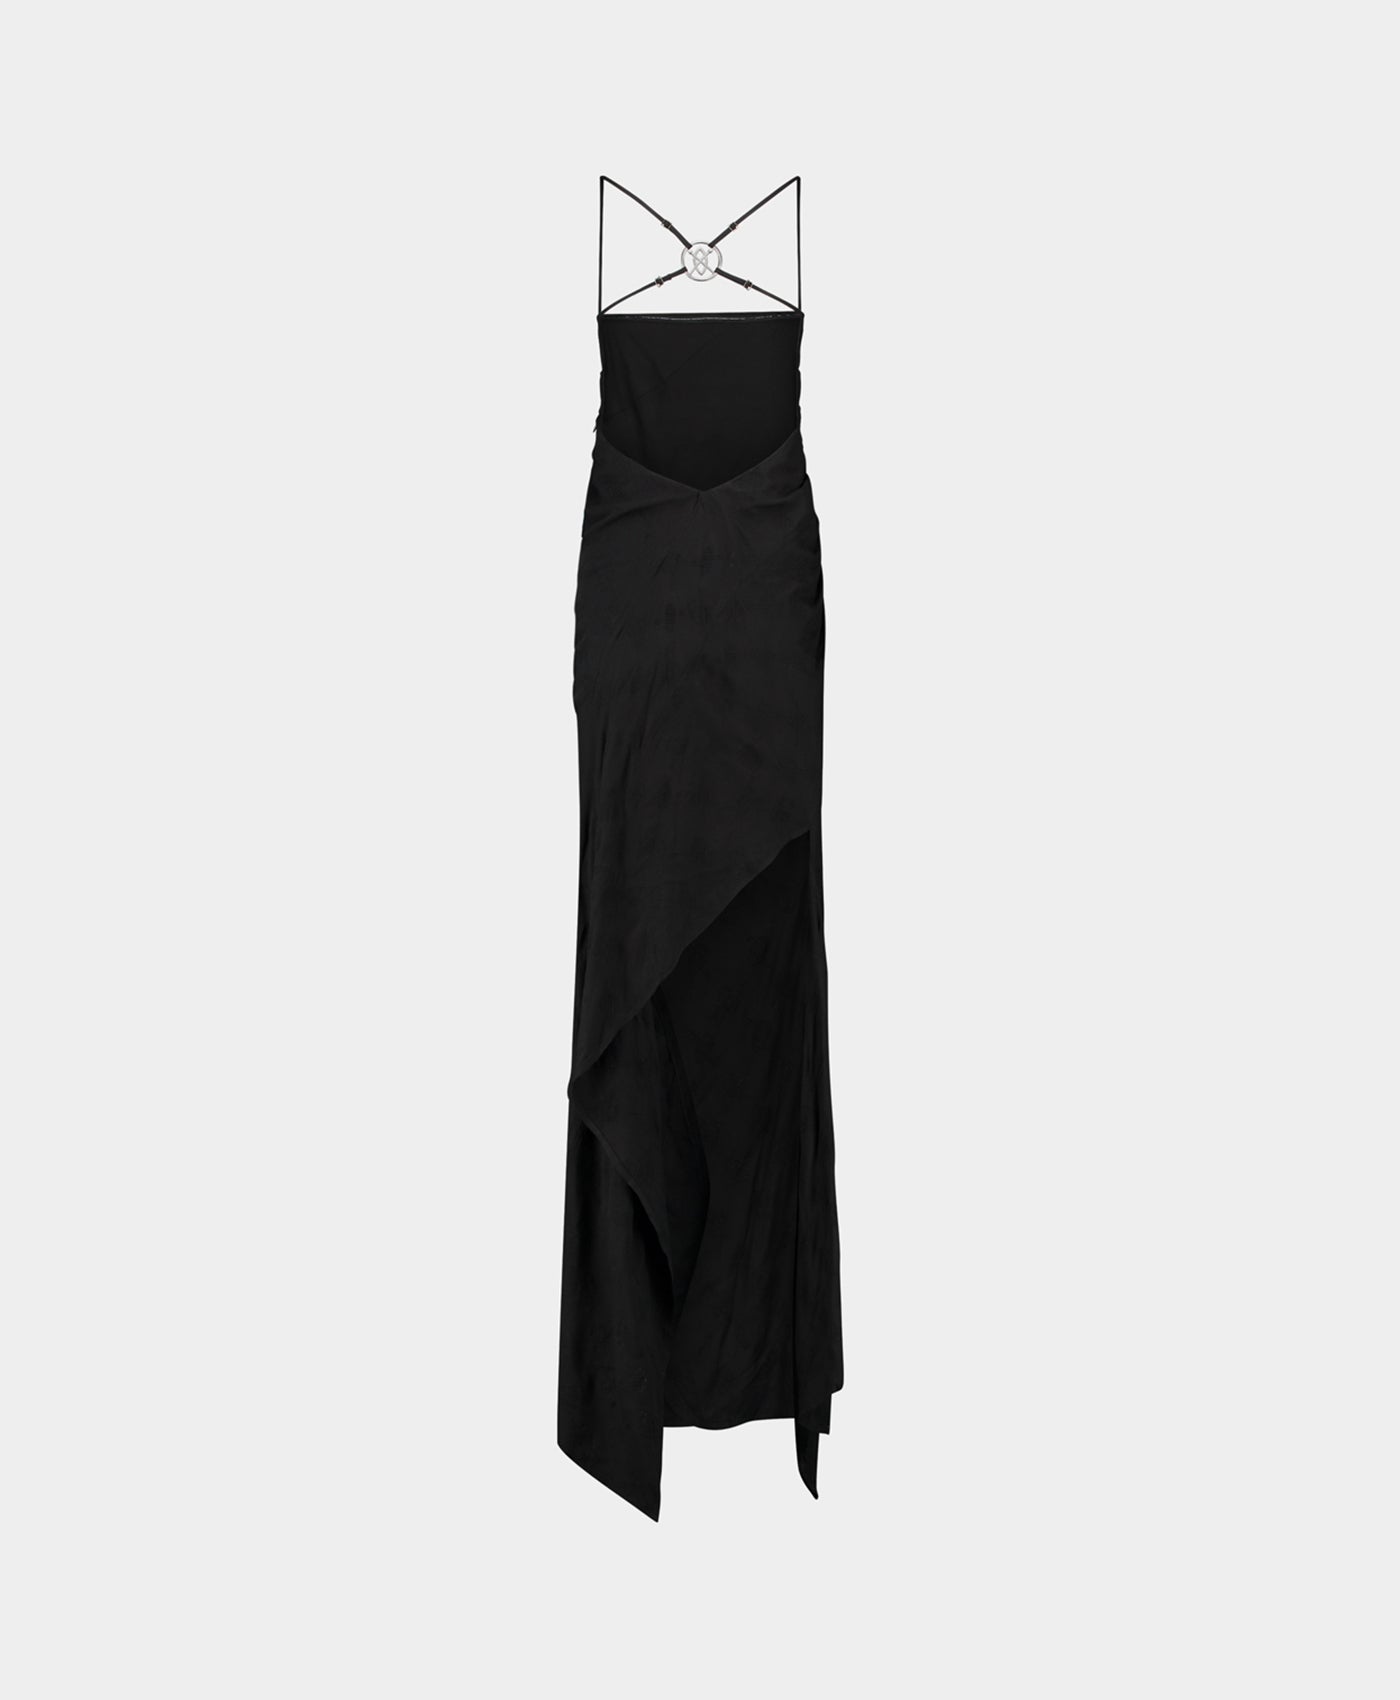 DP - Black Ramoja Dress - Packshot - Rear